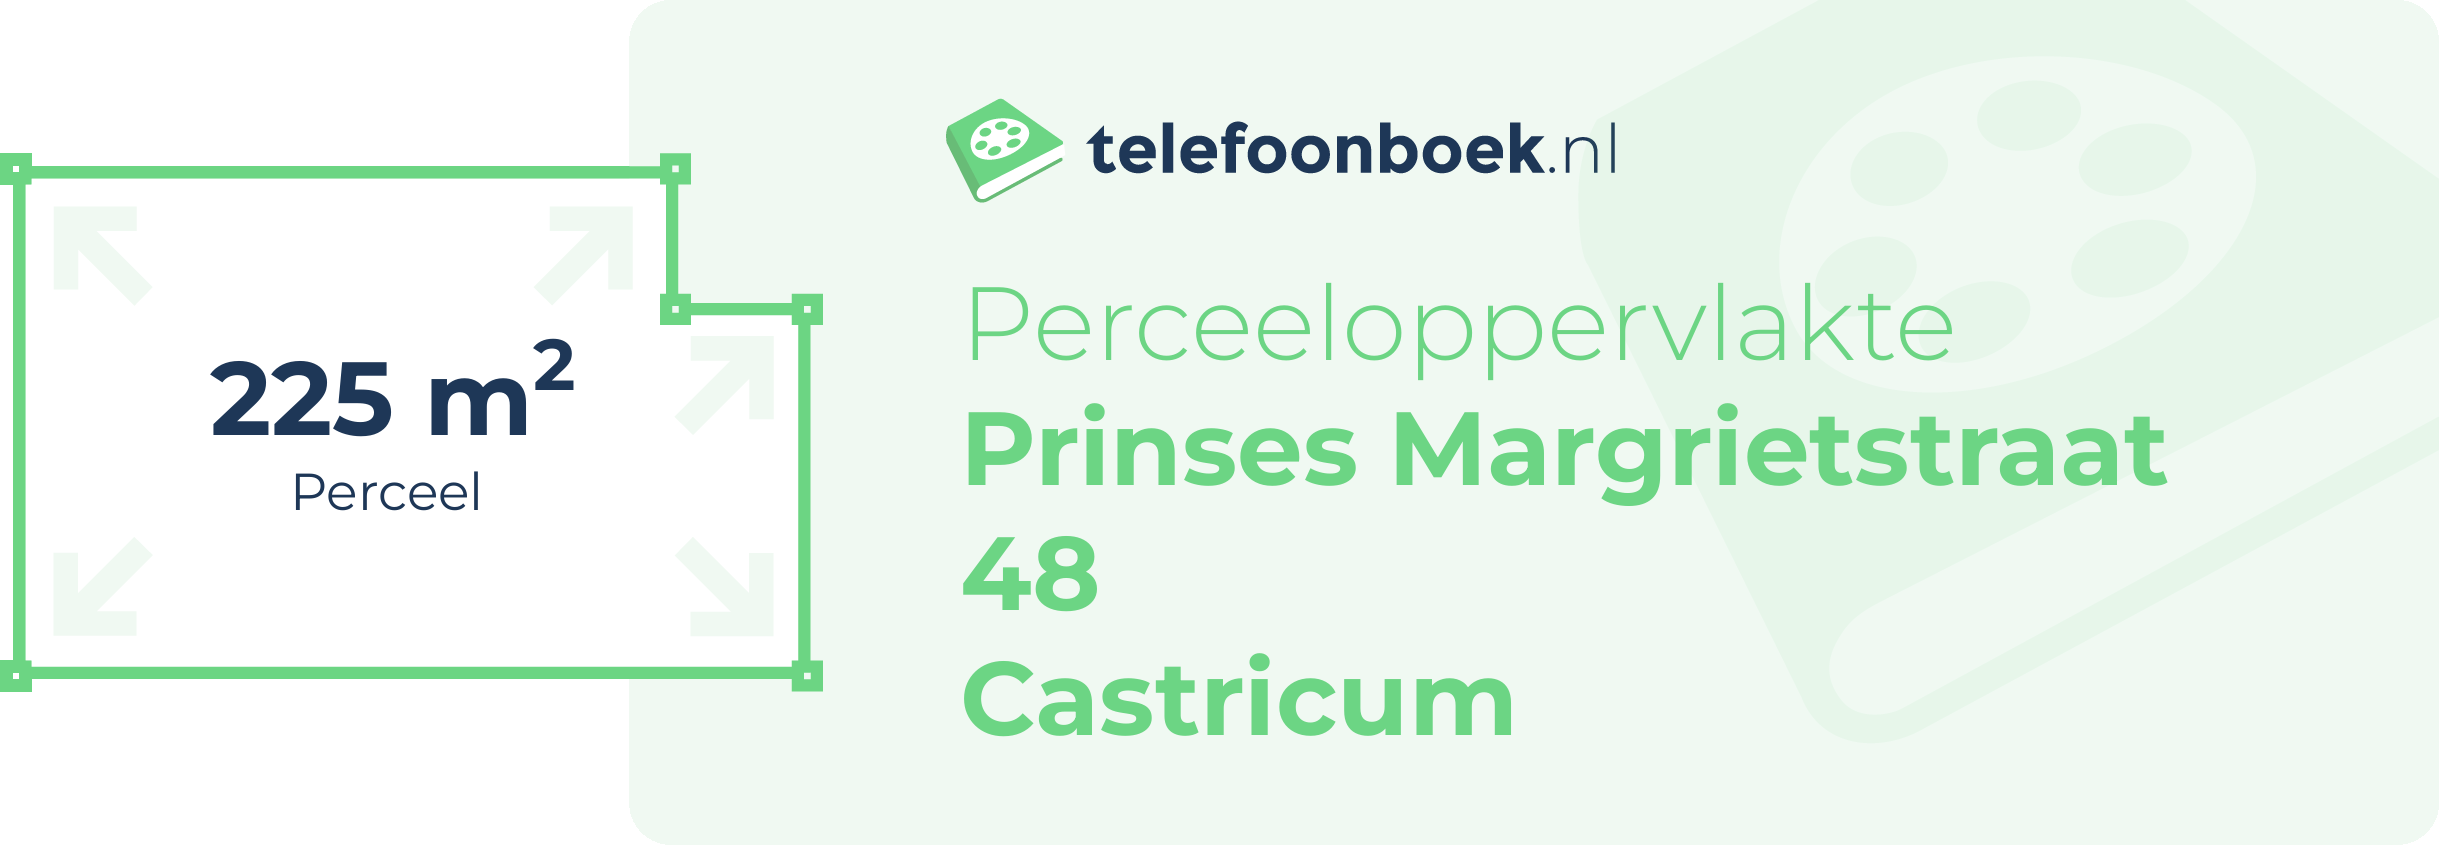 Perceeloppervlakte Prinses Margrietstraat 48 Castricum